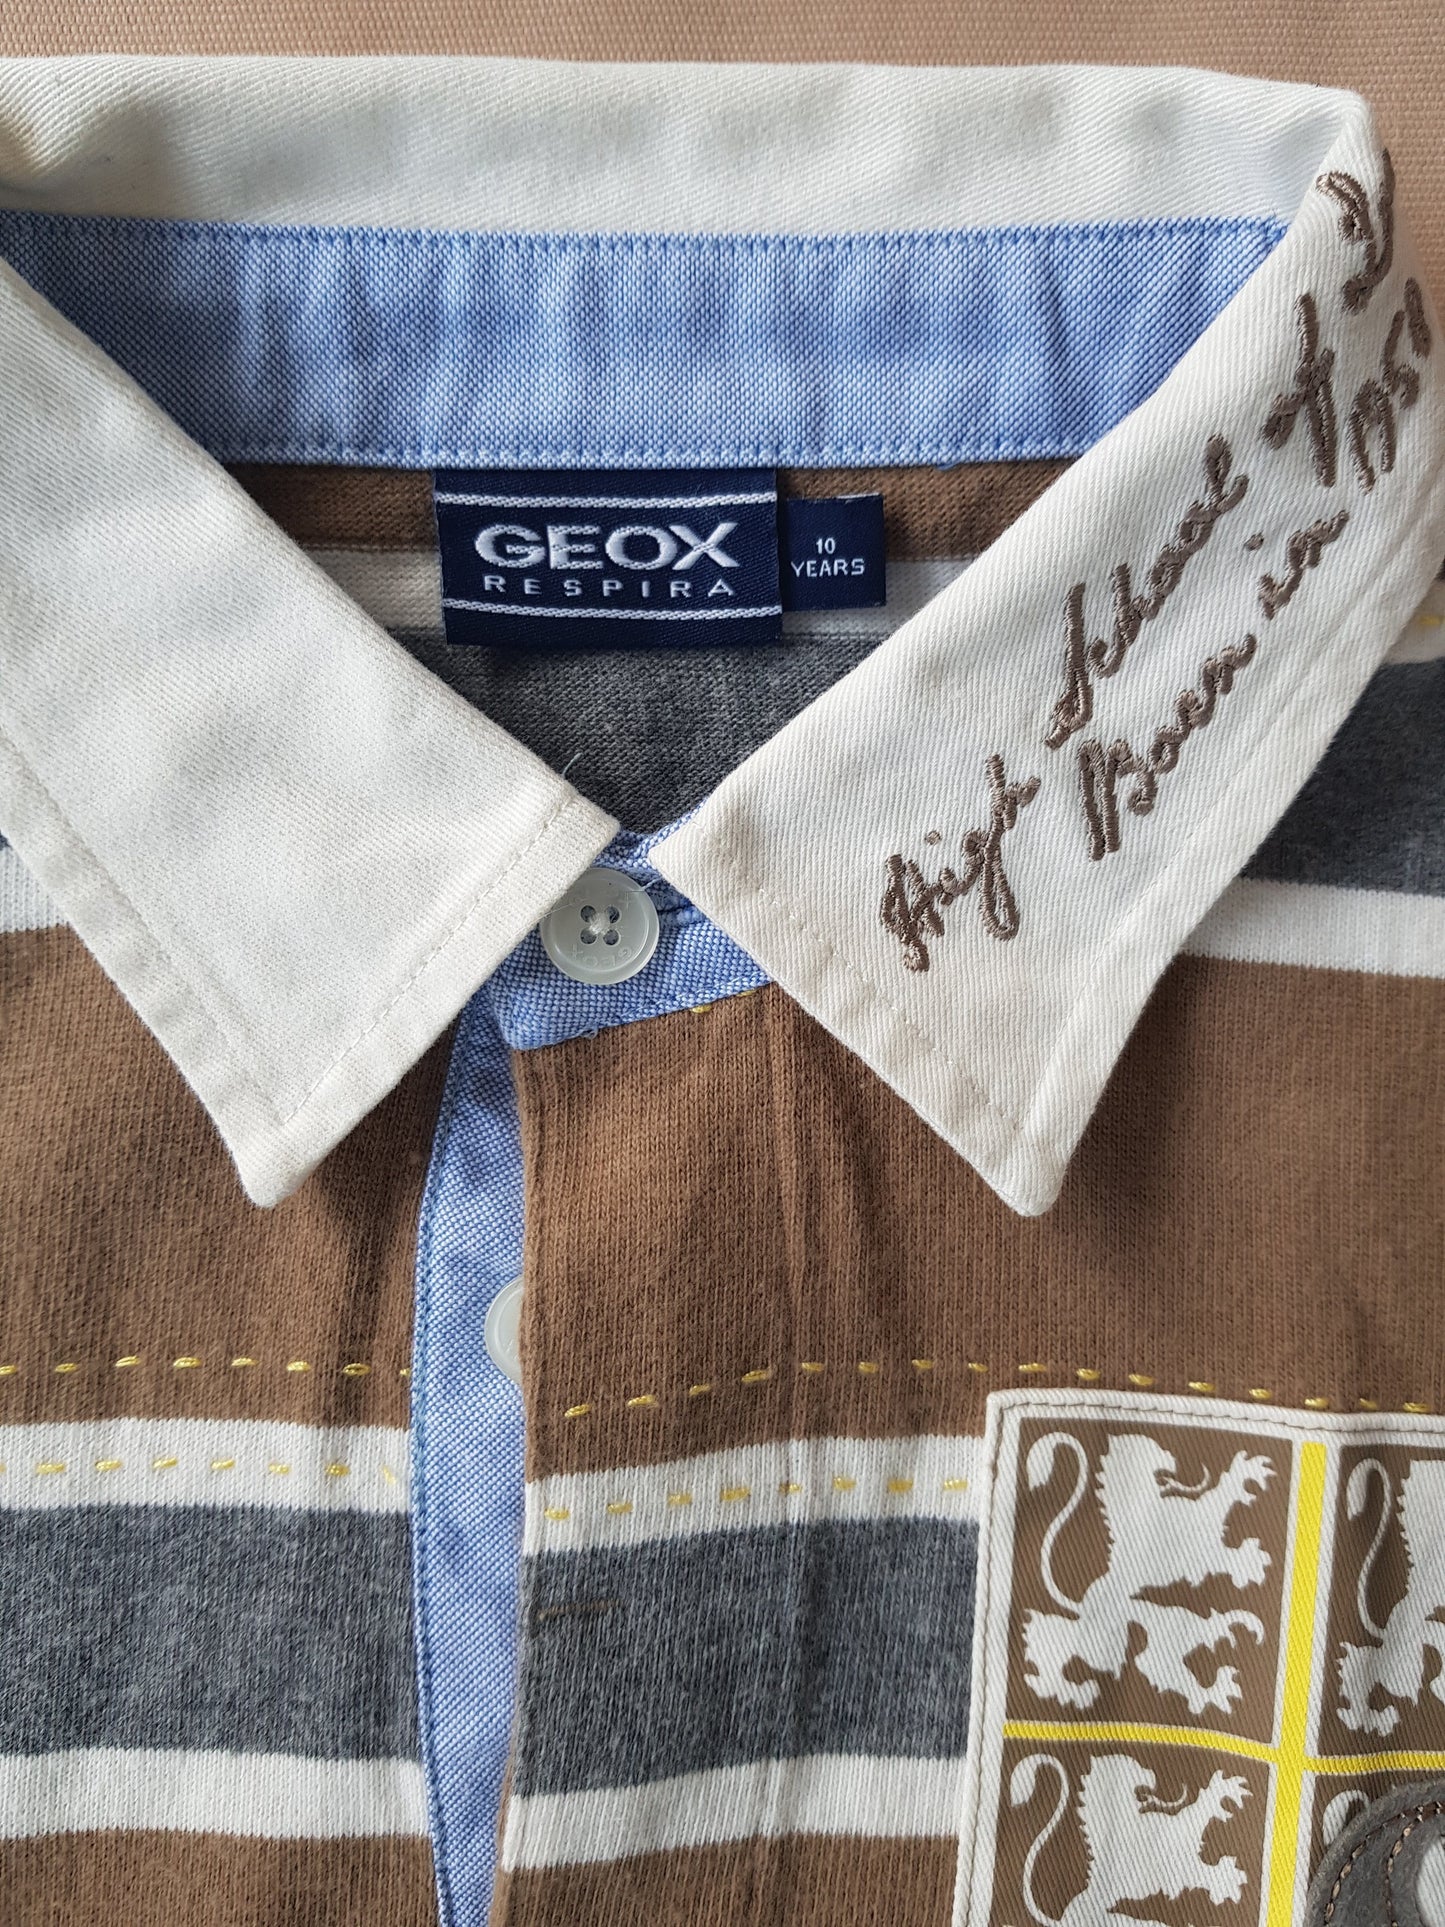 Geox Respira Rugby Shirt Very Good,10 yrs Geox Respira  (6615491805369)